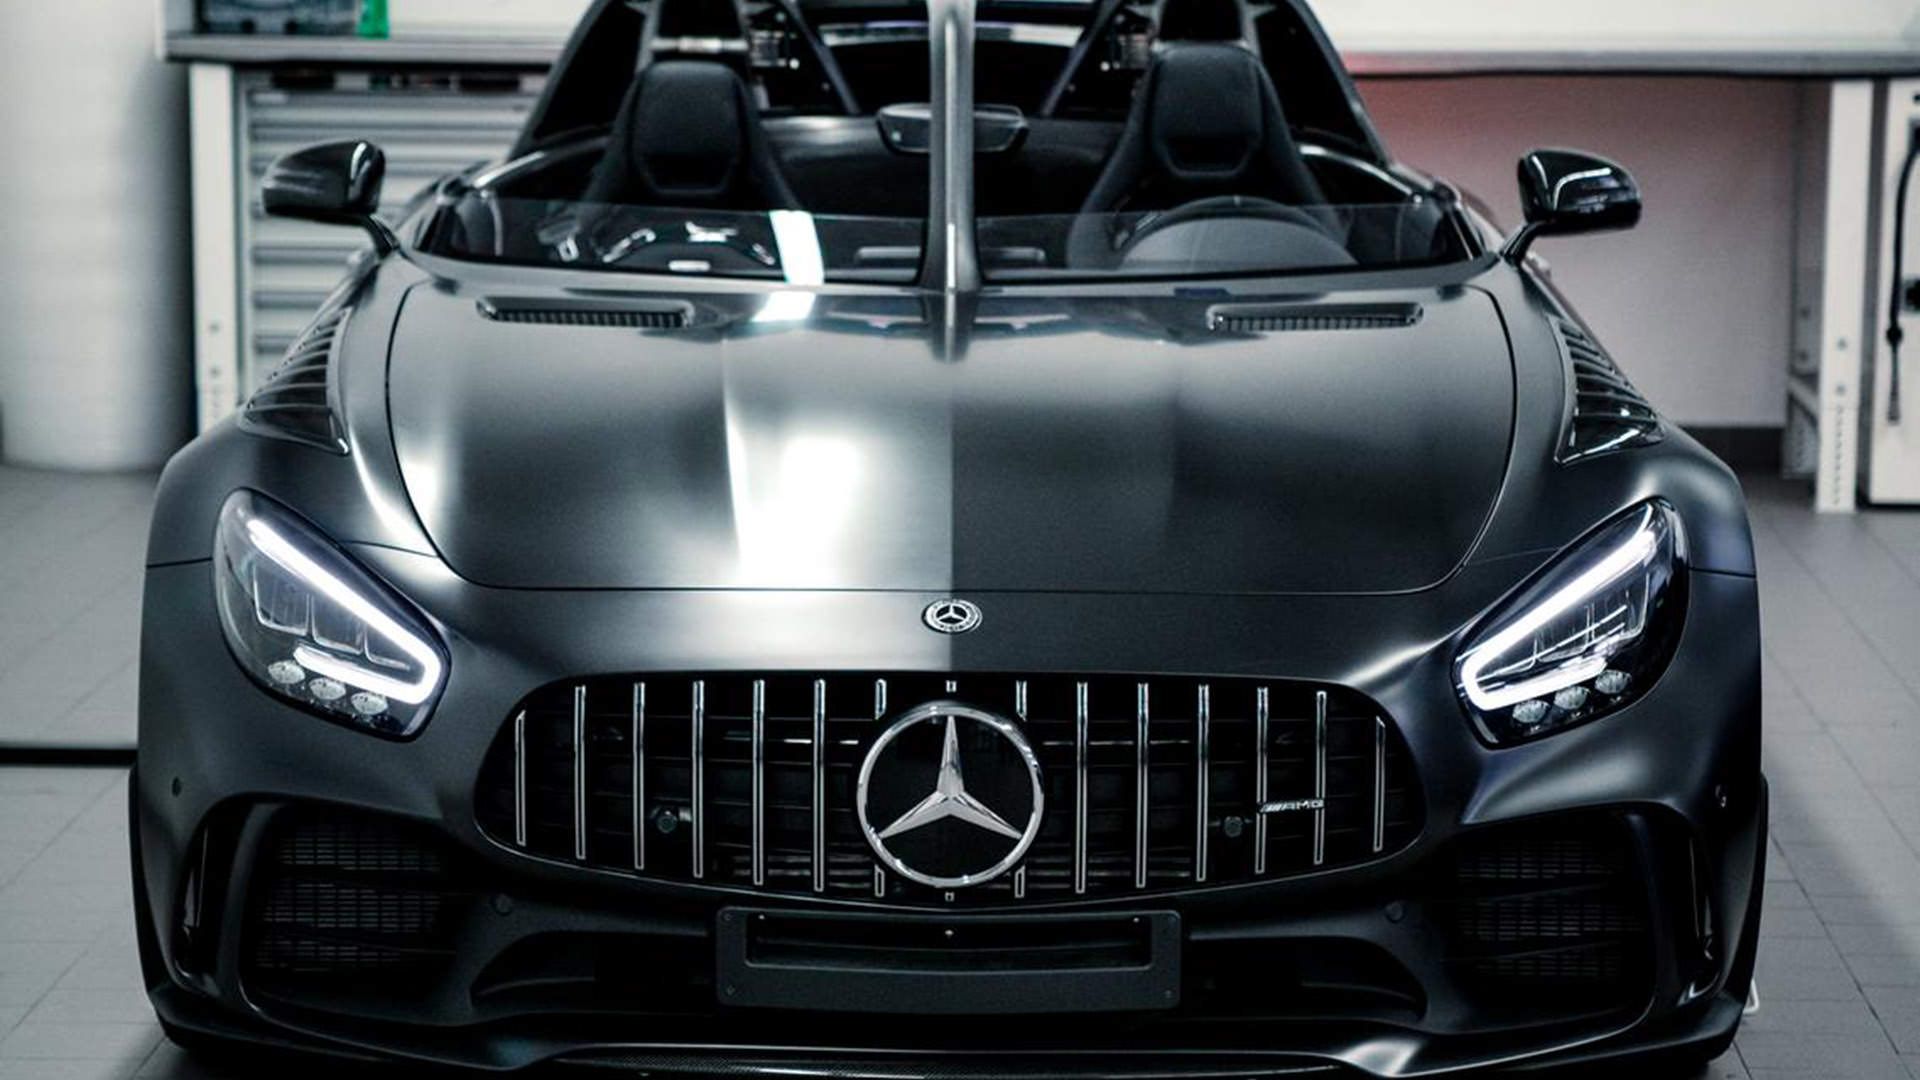 لوگوی مرسدس بنز در جلوپنجره مرسدس آ ام گ جی تی آر اسپیدستر / Mercedes-AMG GT R Speedster مشکی رنگ